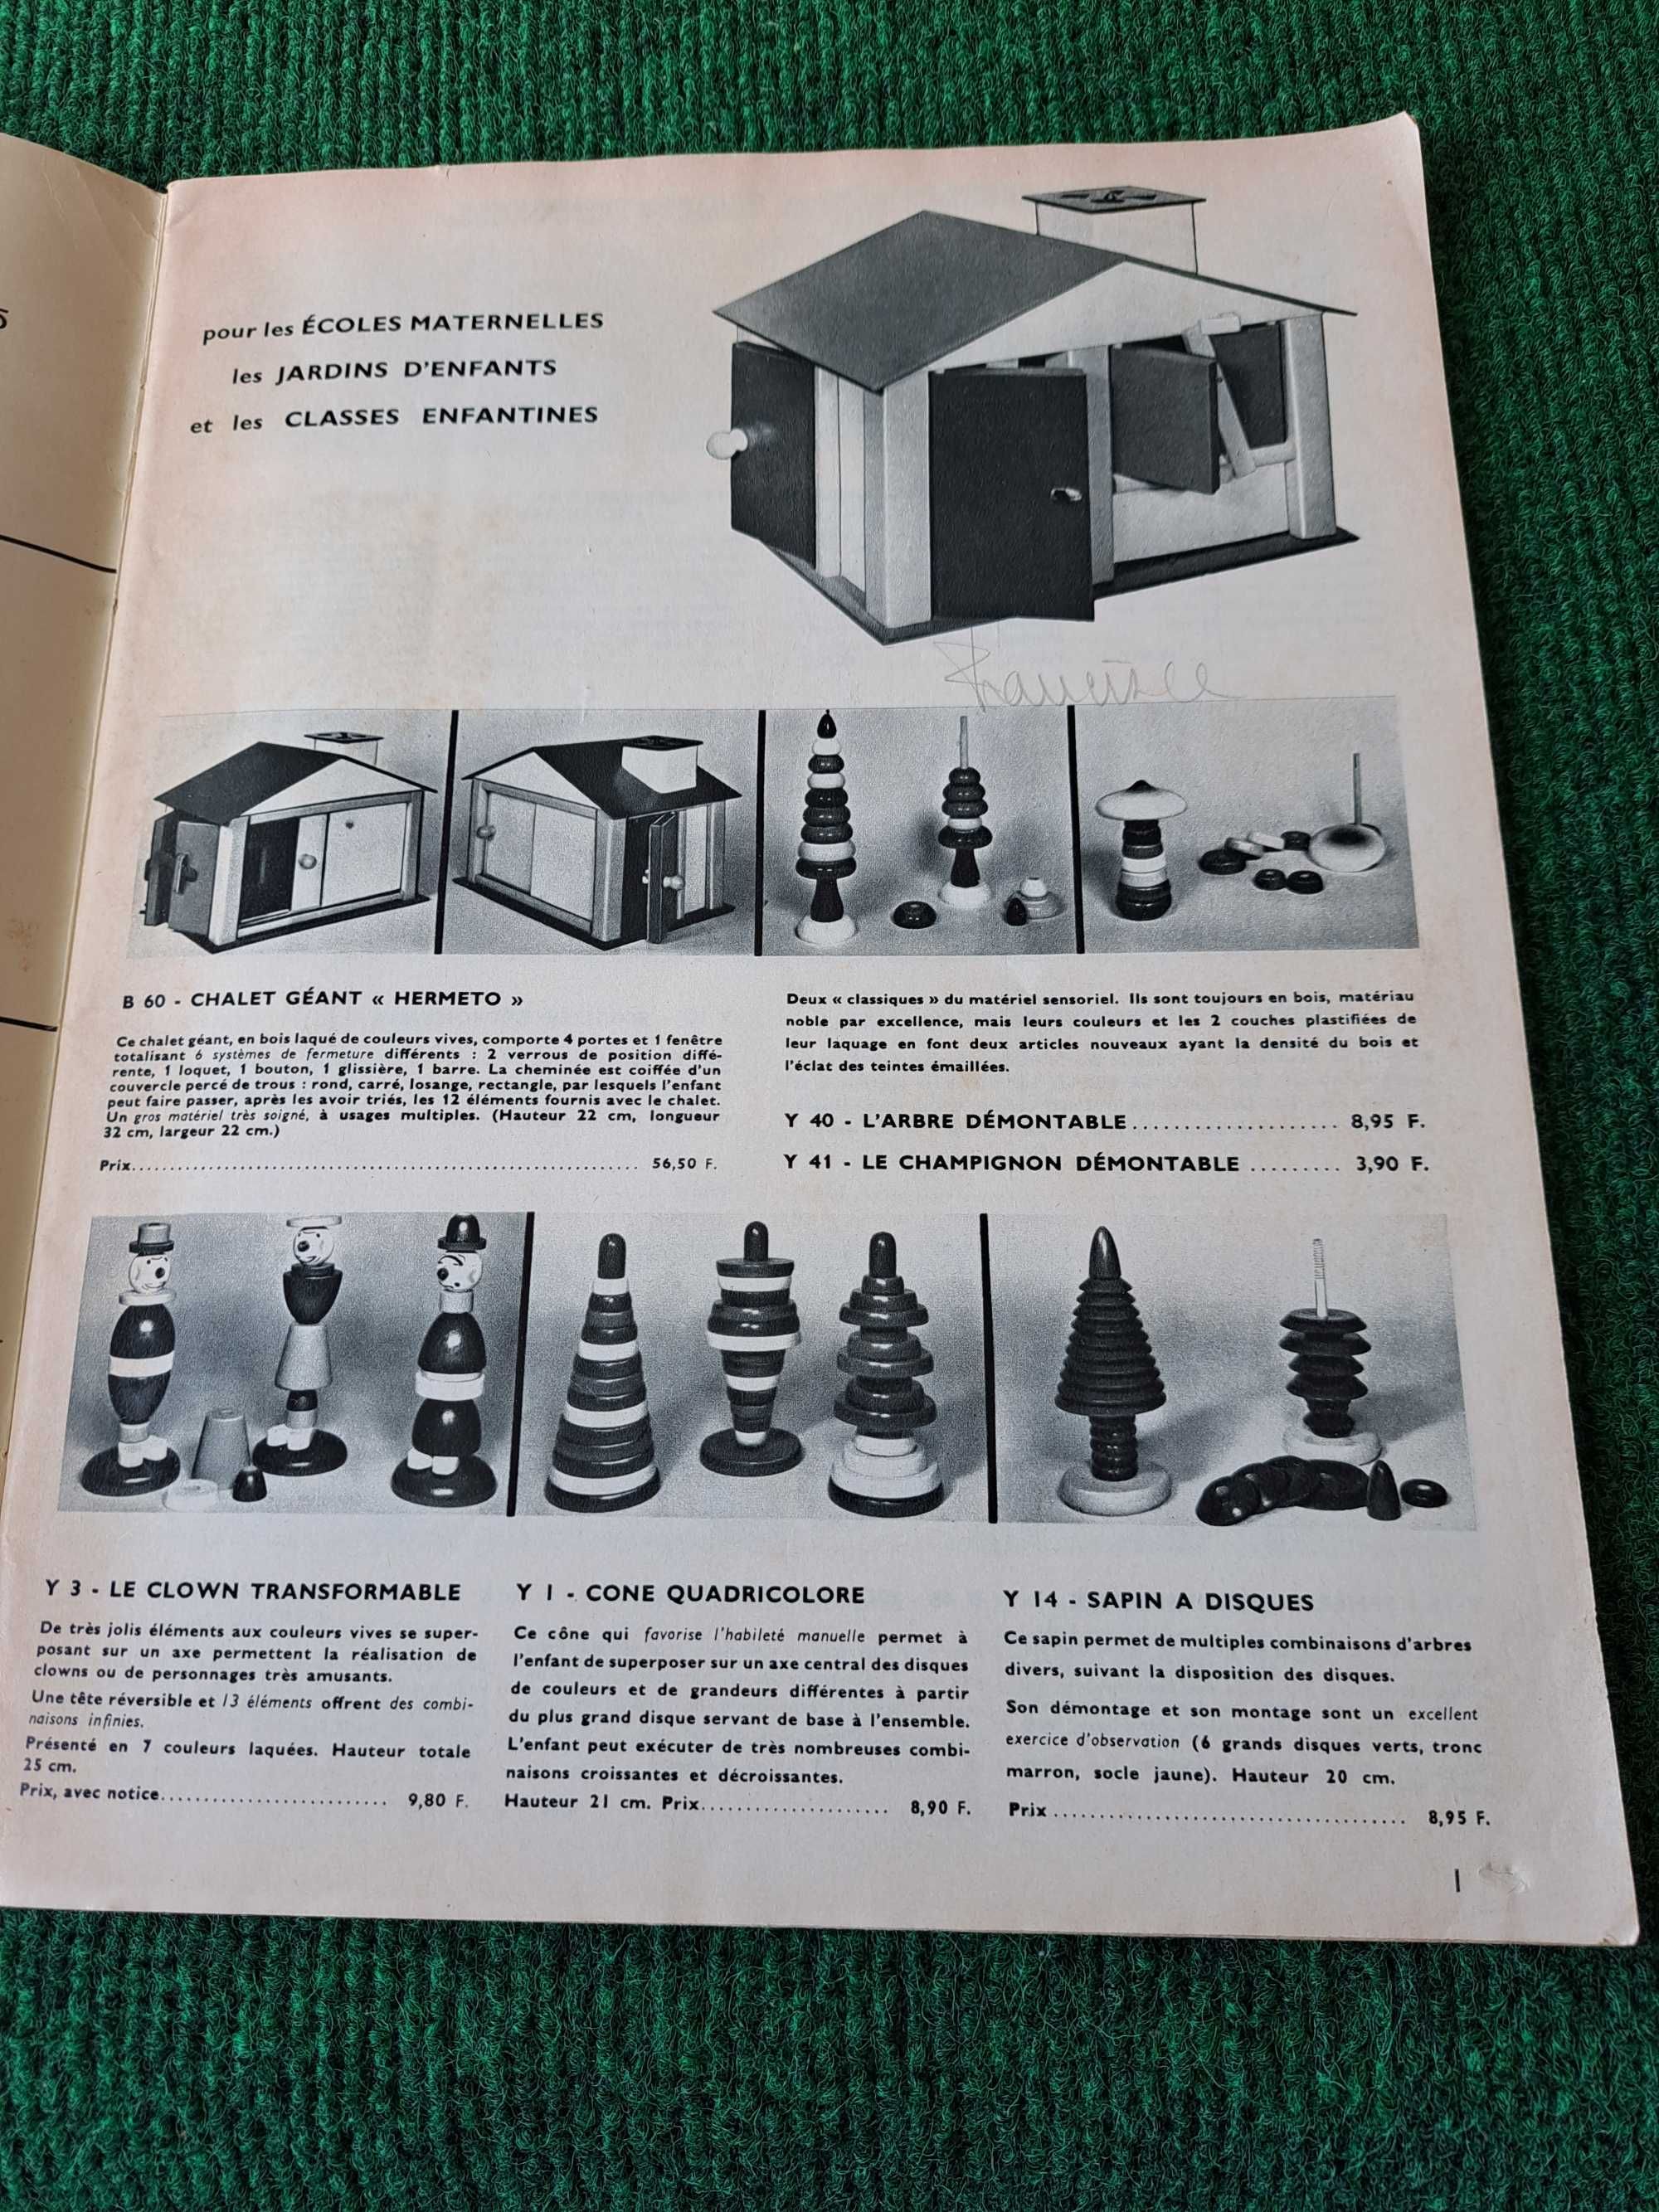 Matériel didactique - Catalogue 1965 - Fernand Nathan